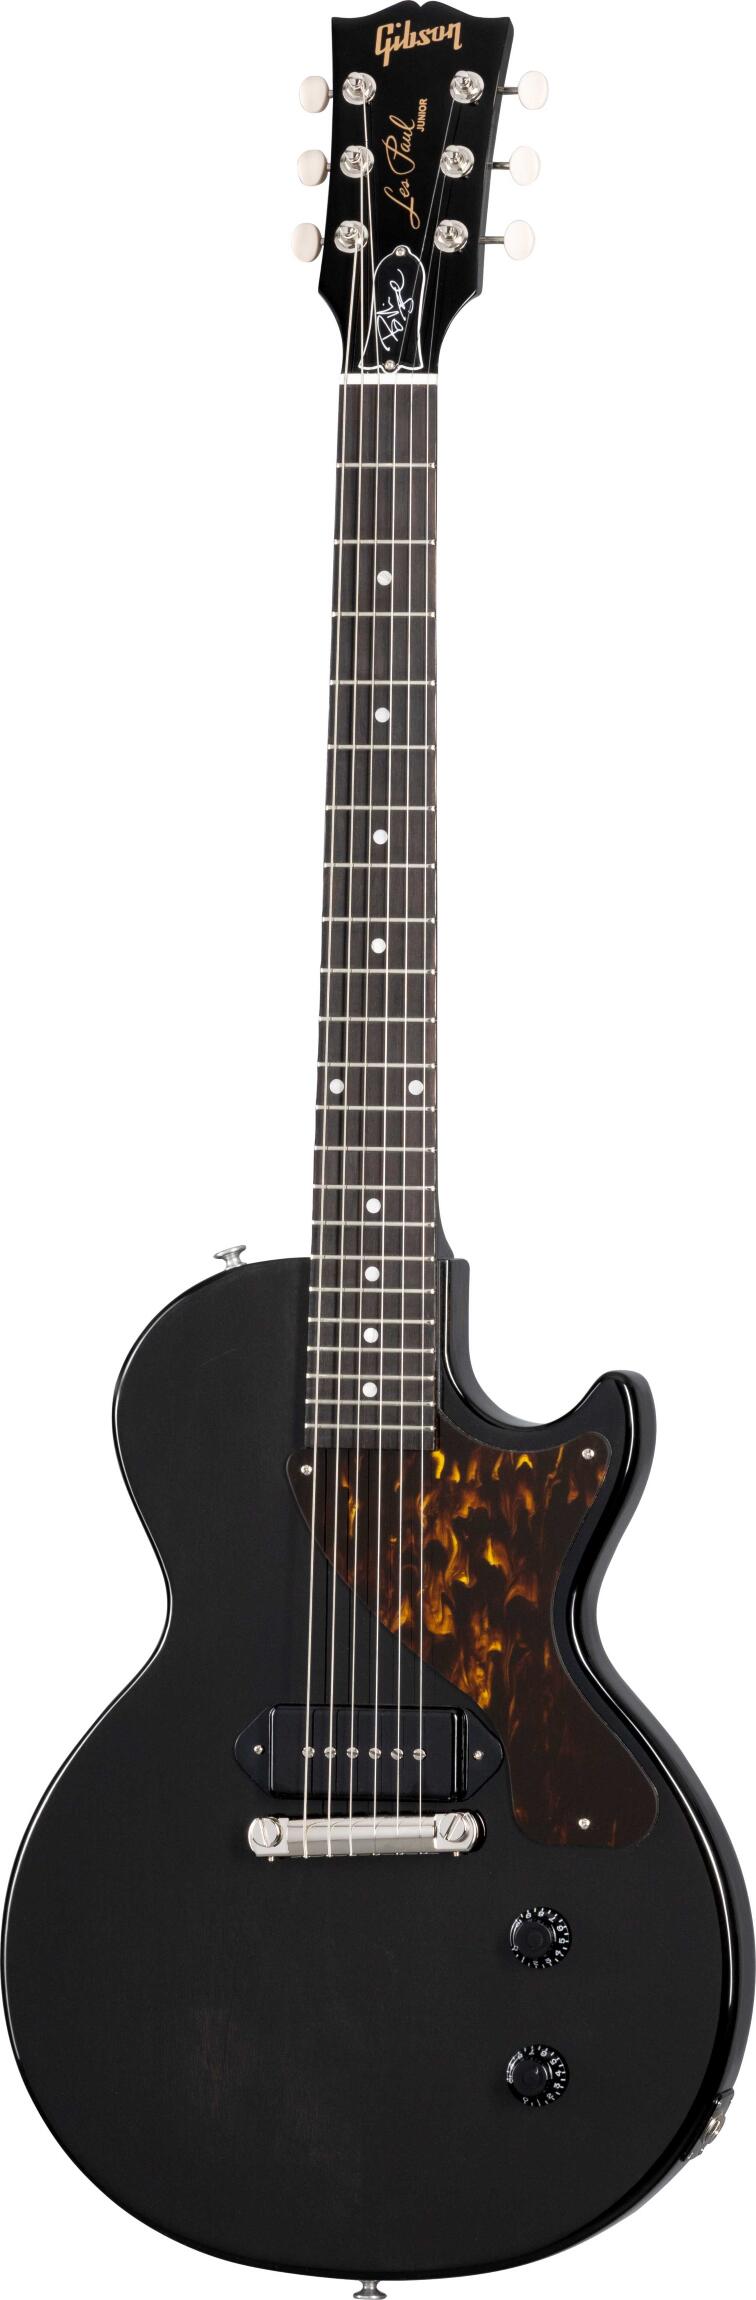 Gibson Billie Joe Armstrong Les Paul Junior Vintage Ebony Gloss : photo 1